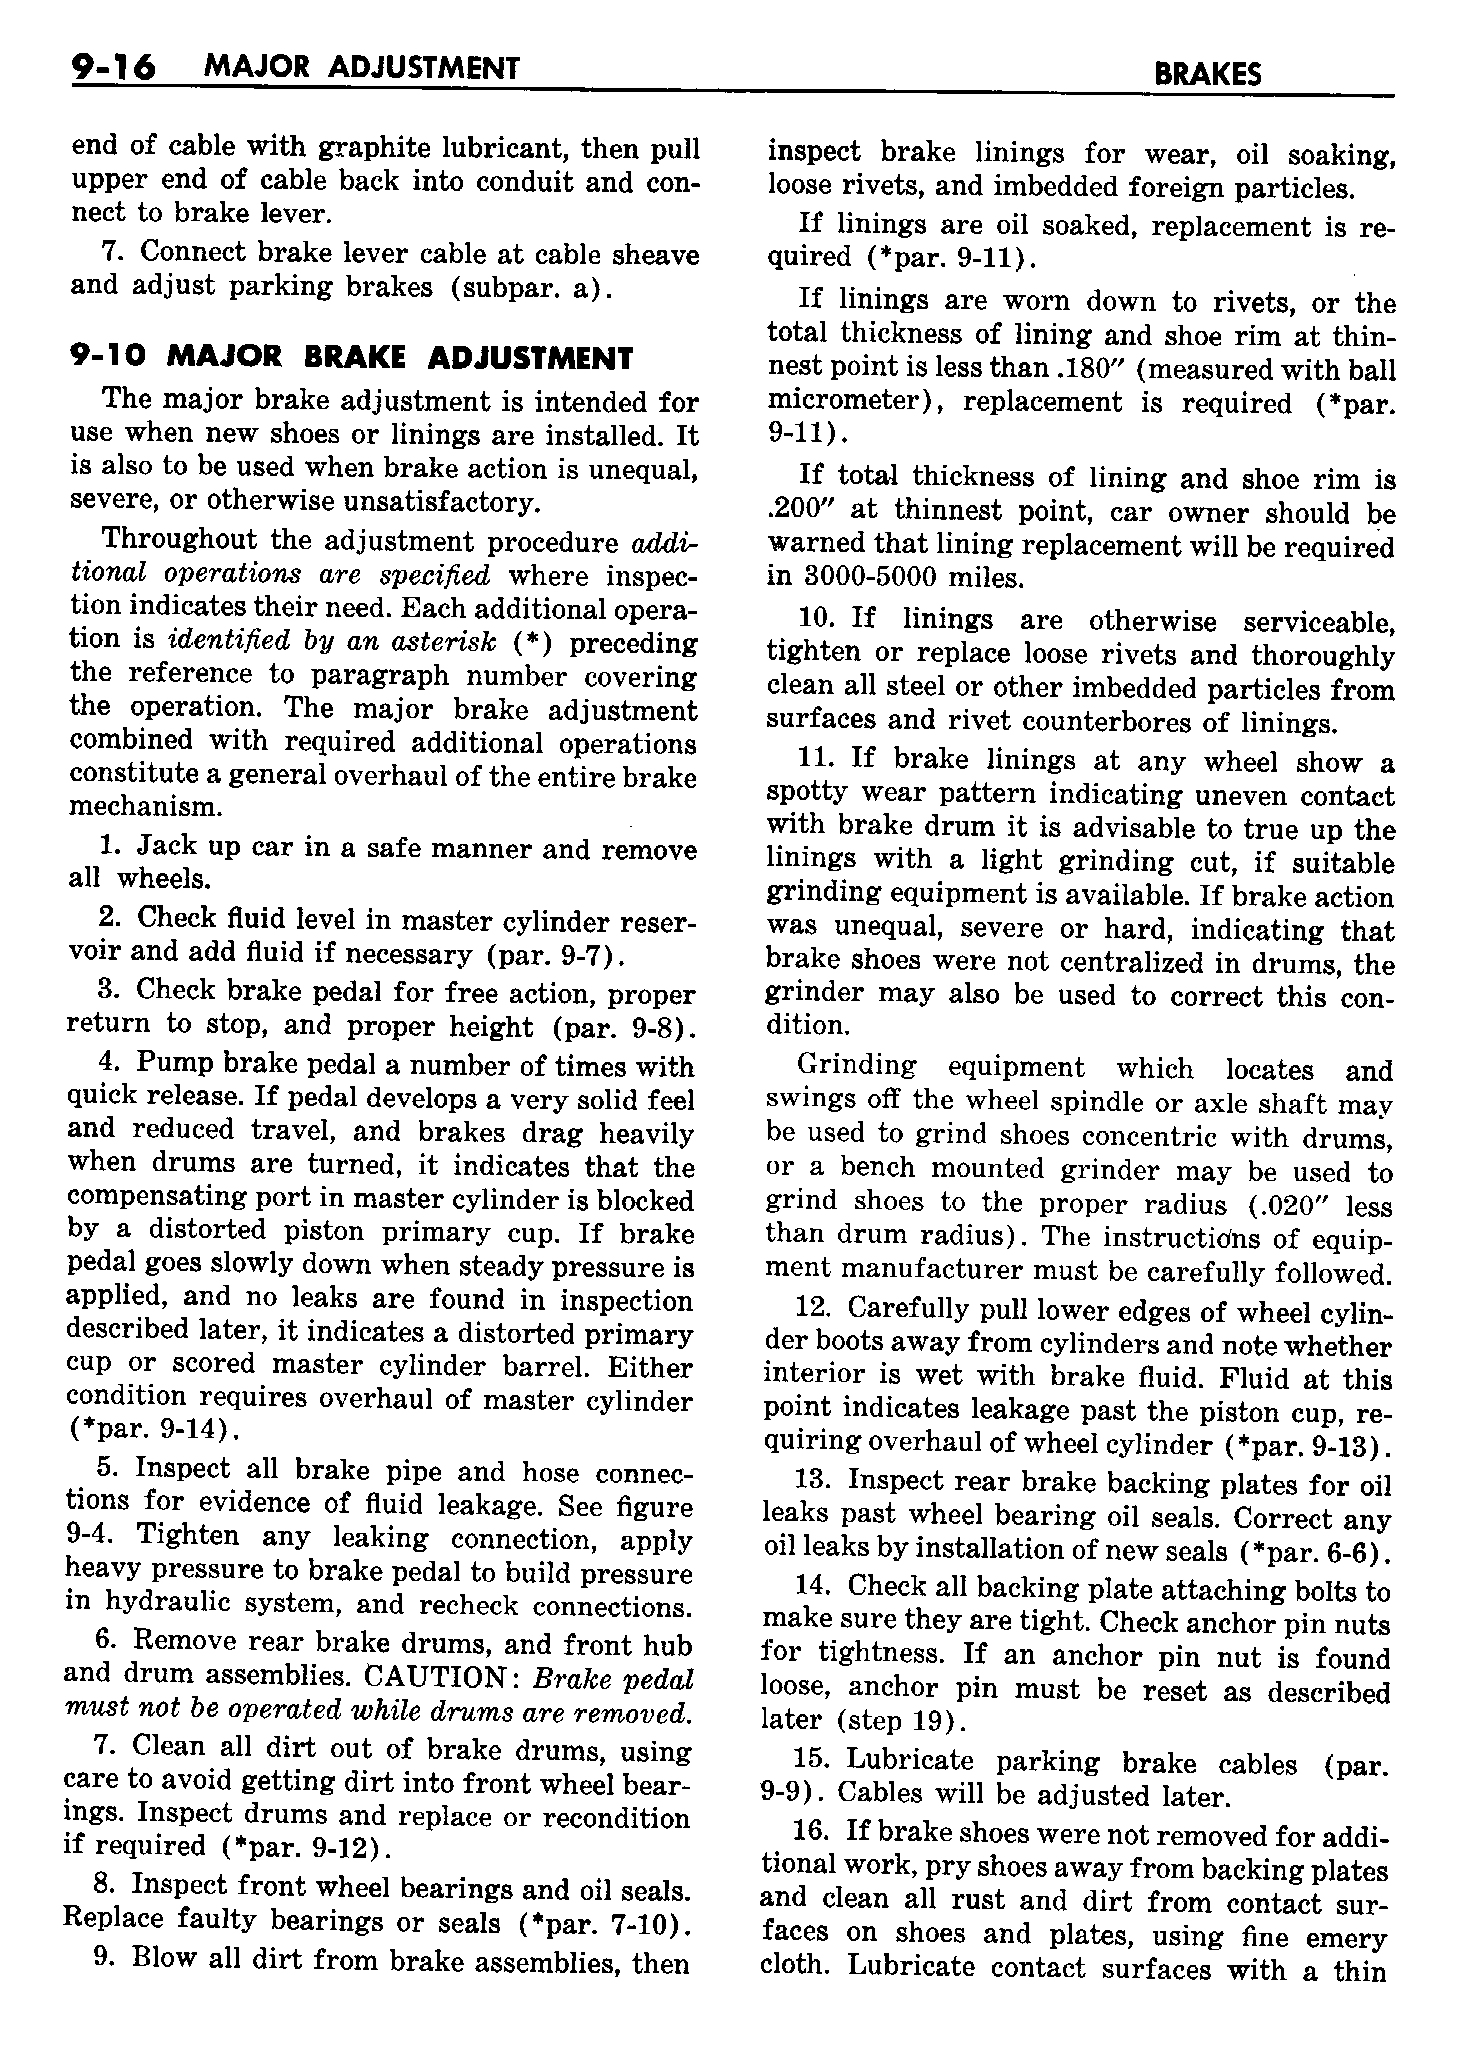 n_10 1958 Buick Shop Manual - Brakes_16.jpg